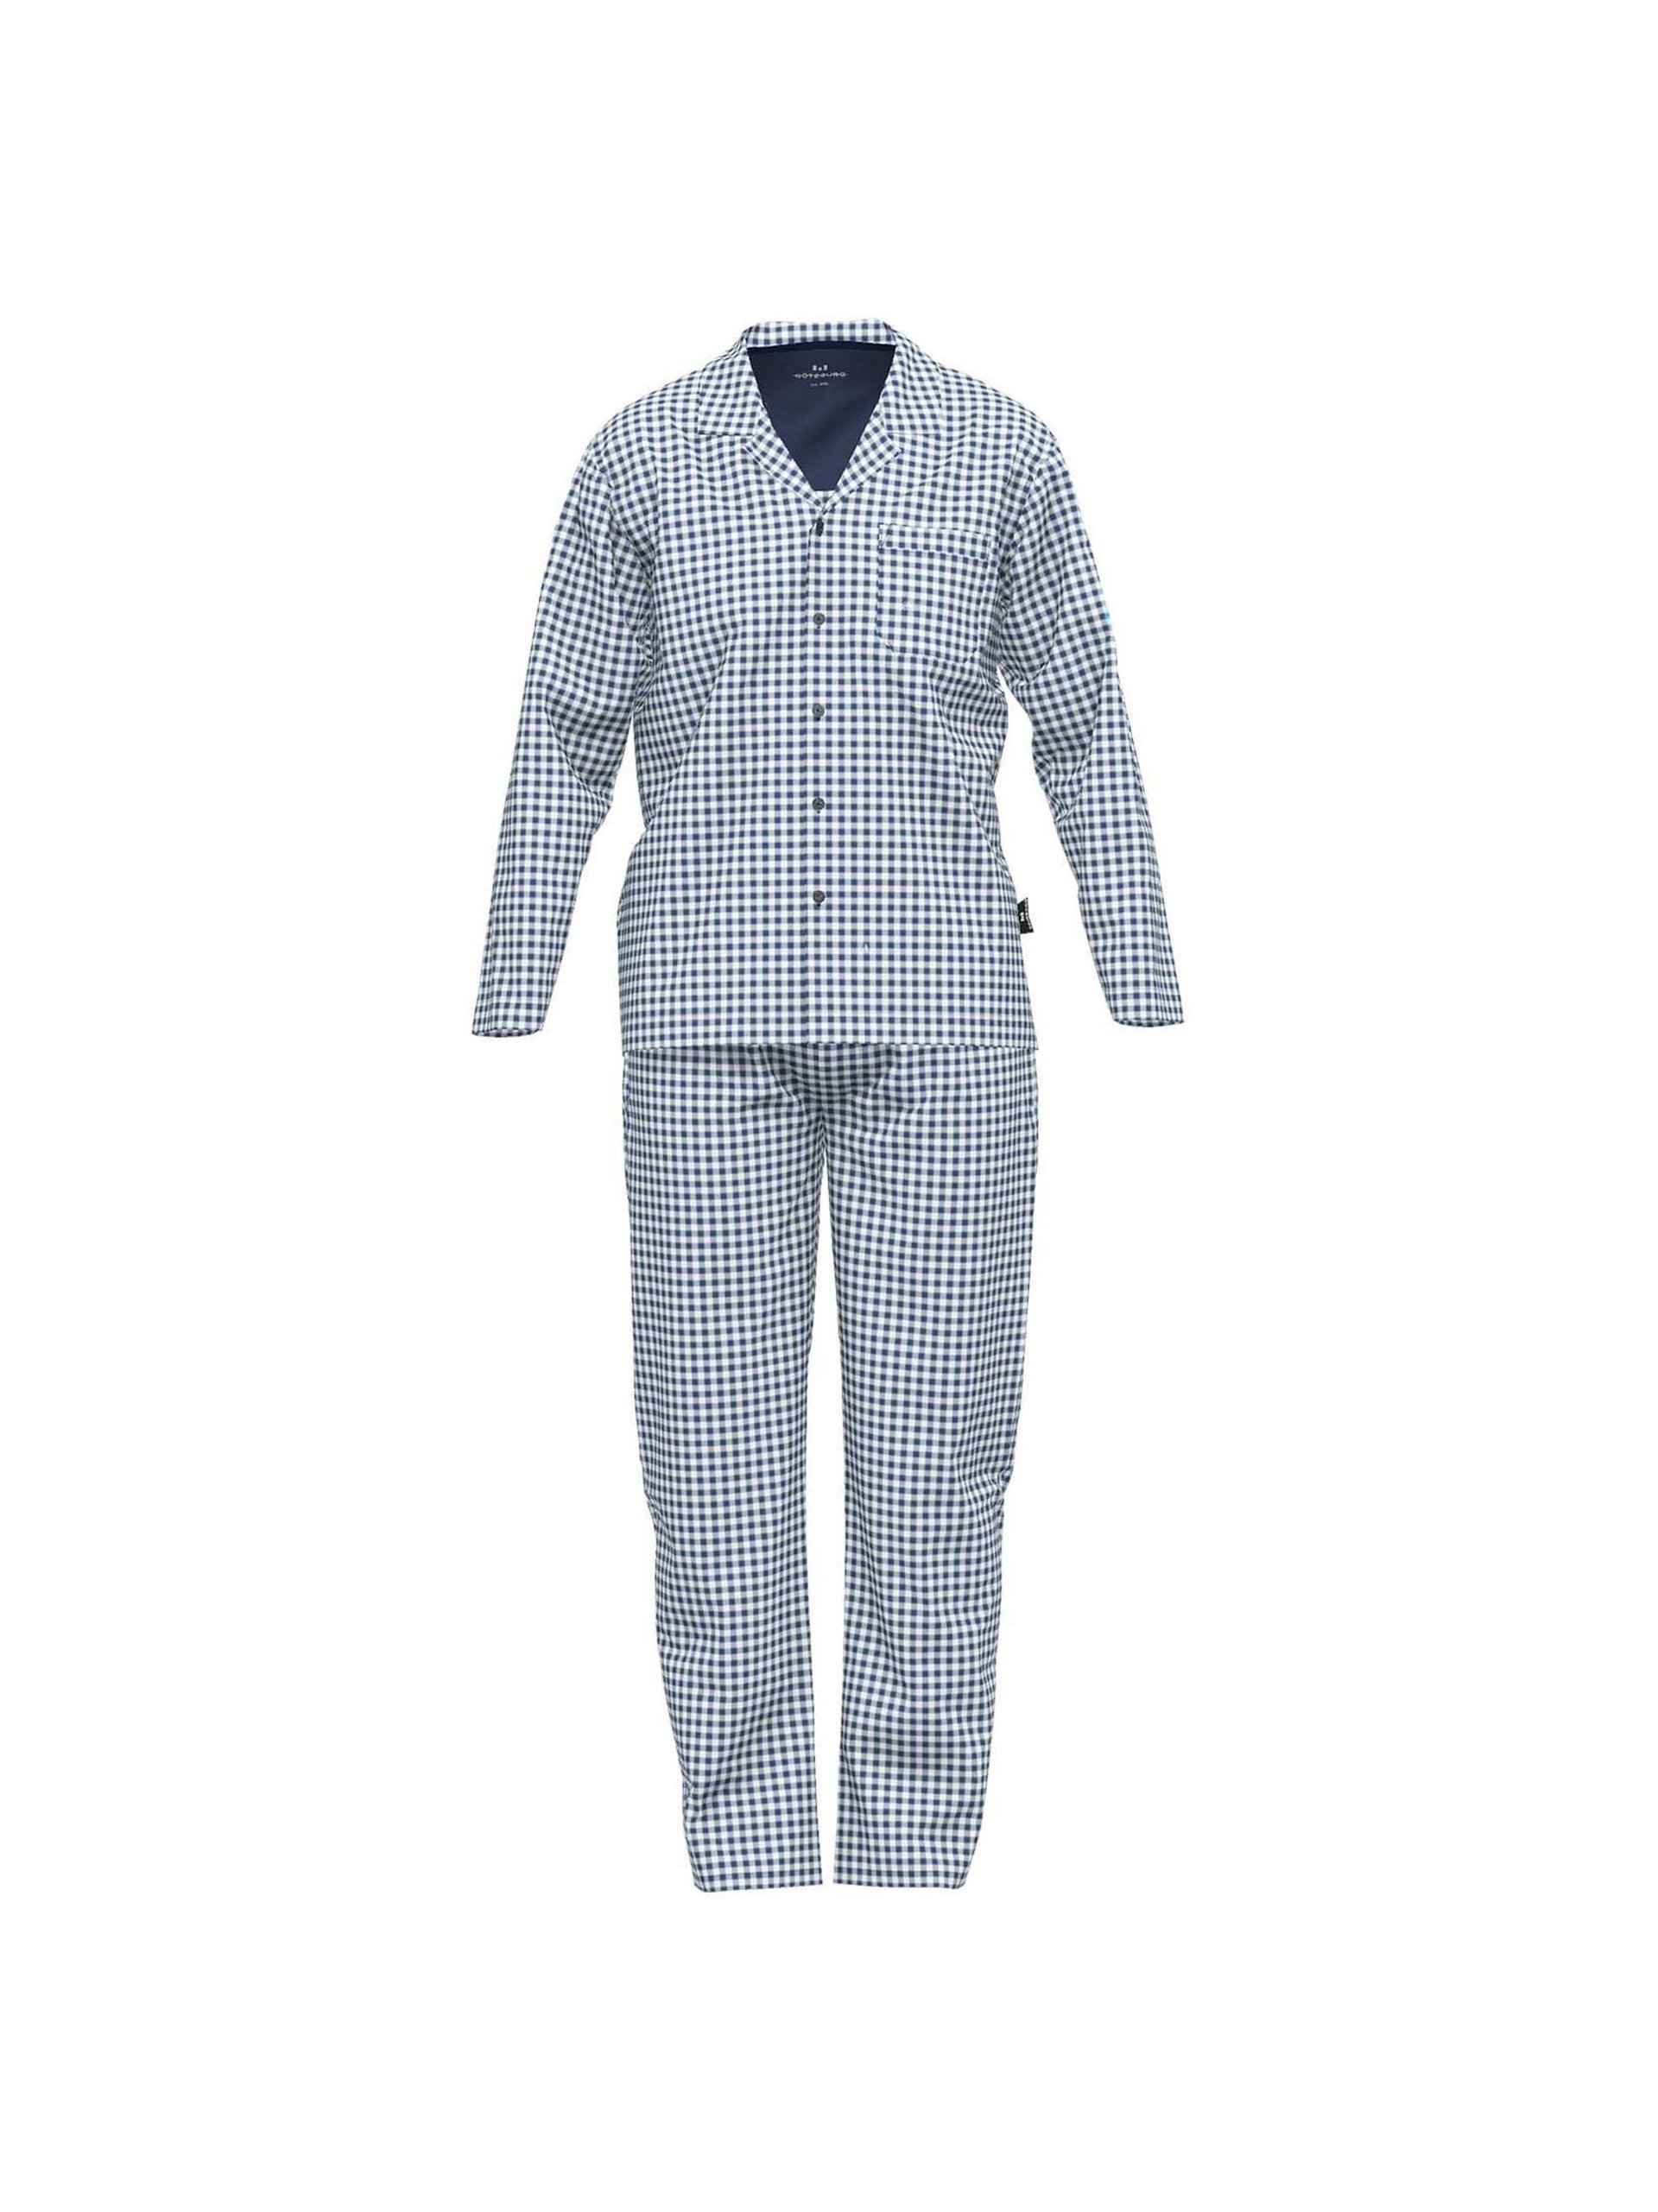 GÖTZBURG Herren online Pyjama kaufen